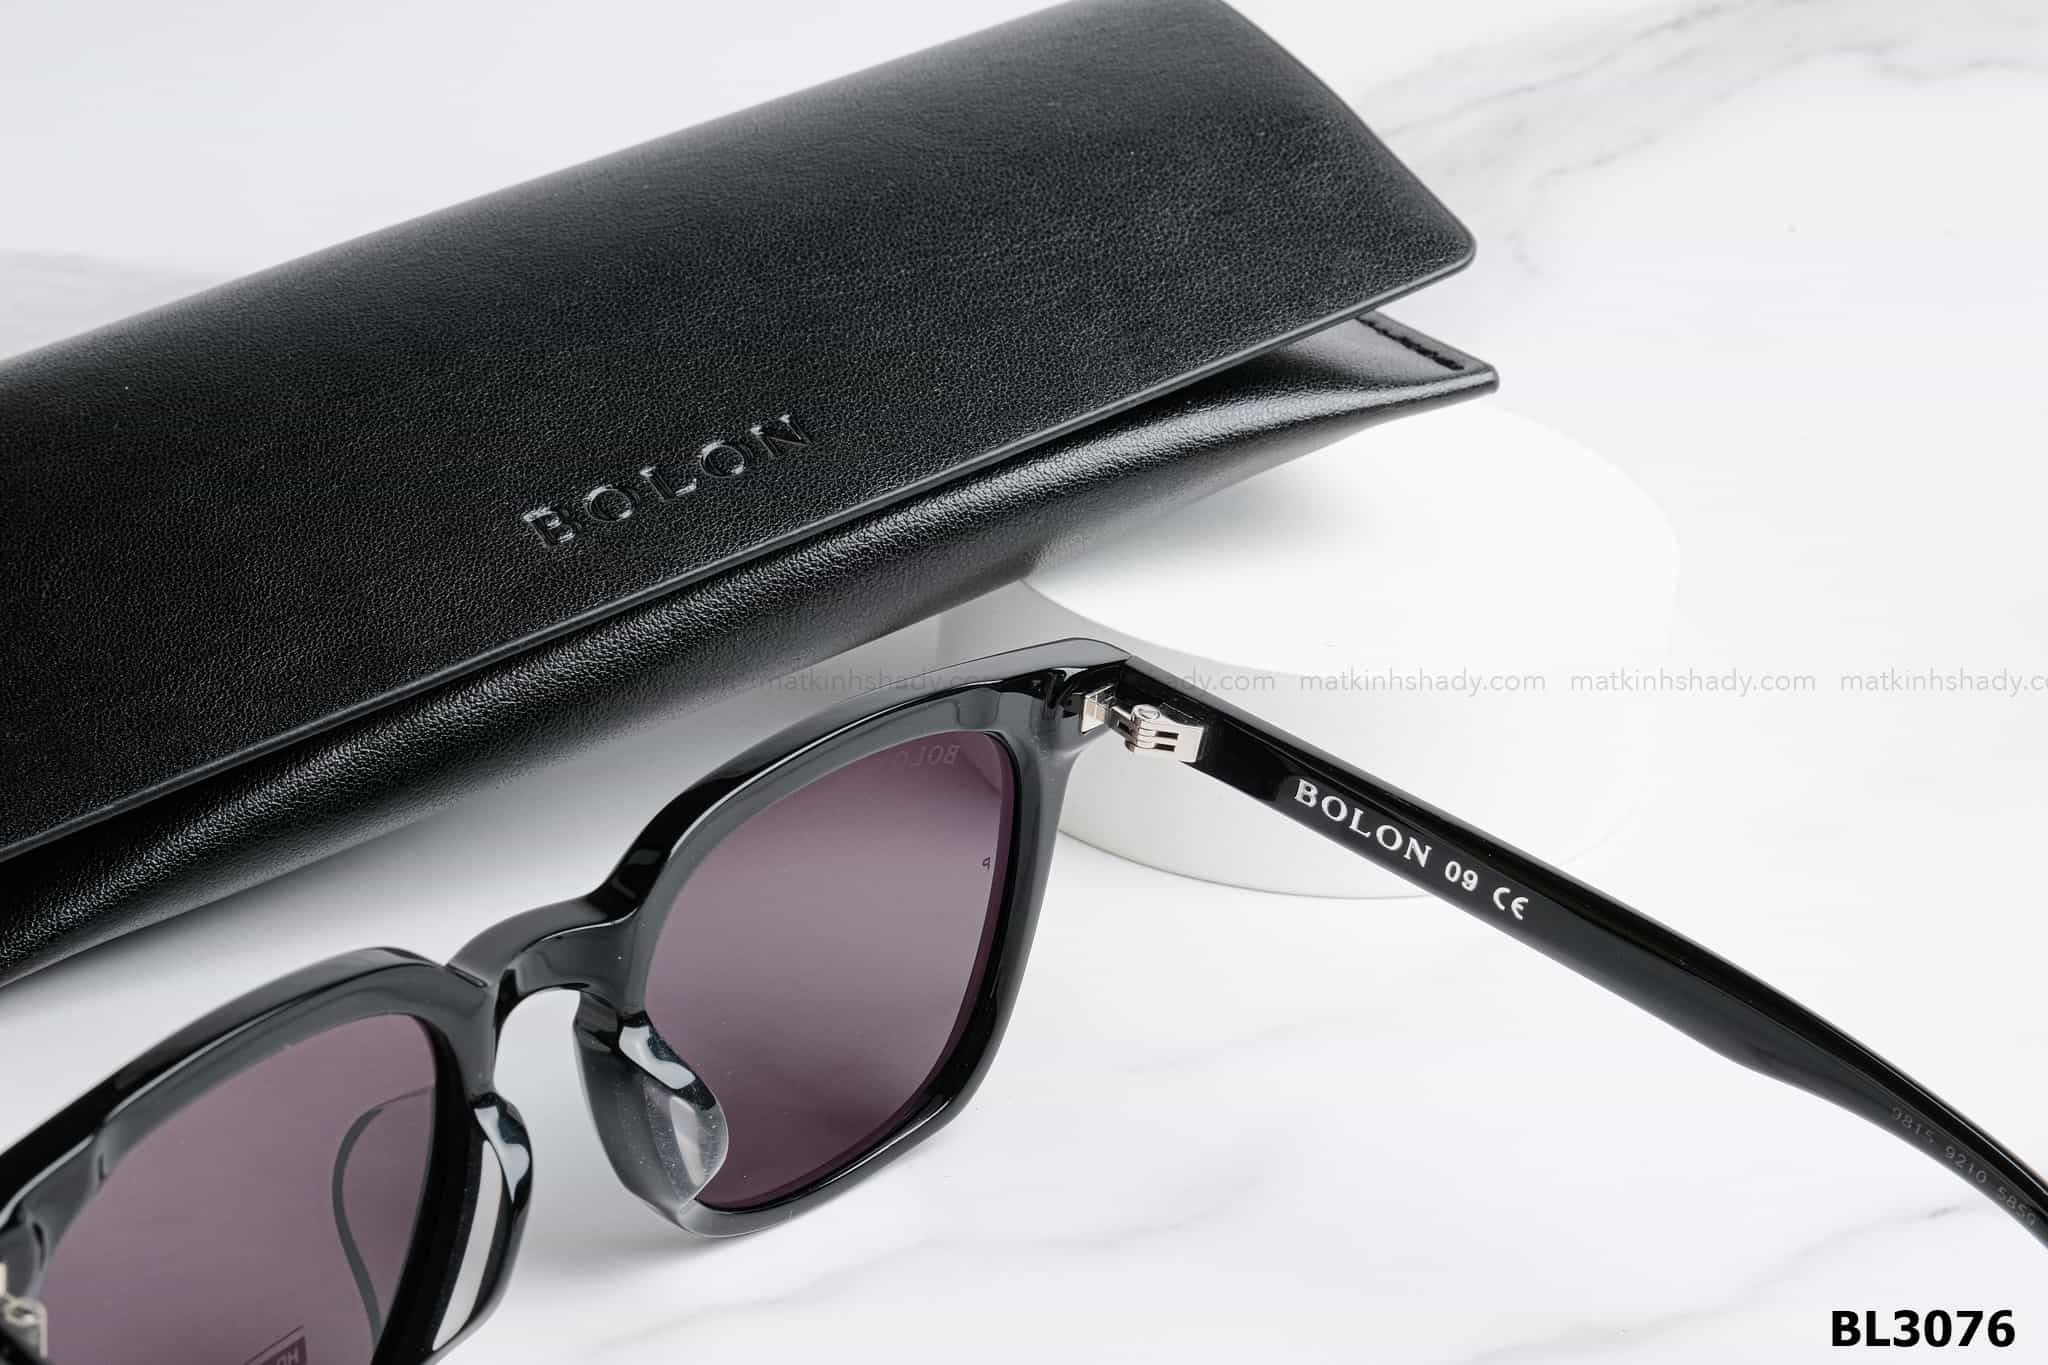  Bolon Eyewear - Sunglasses - BL3076 